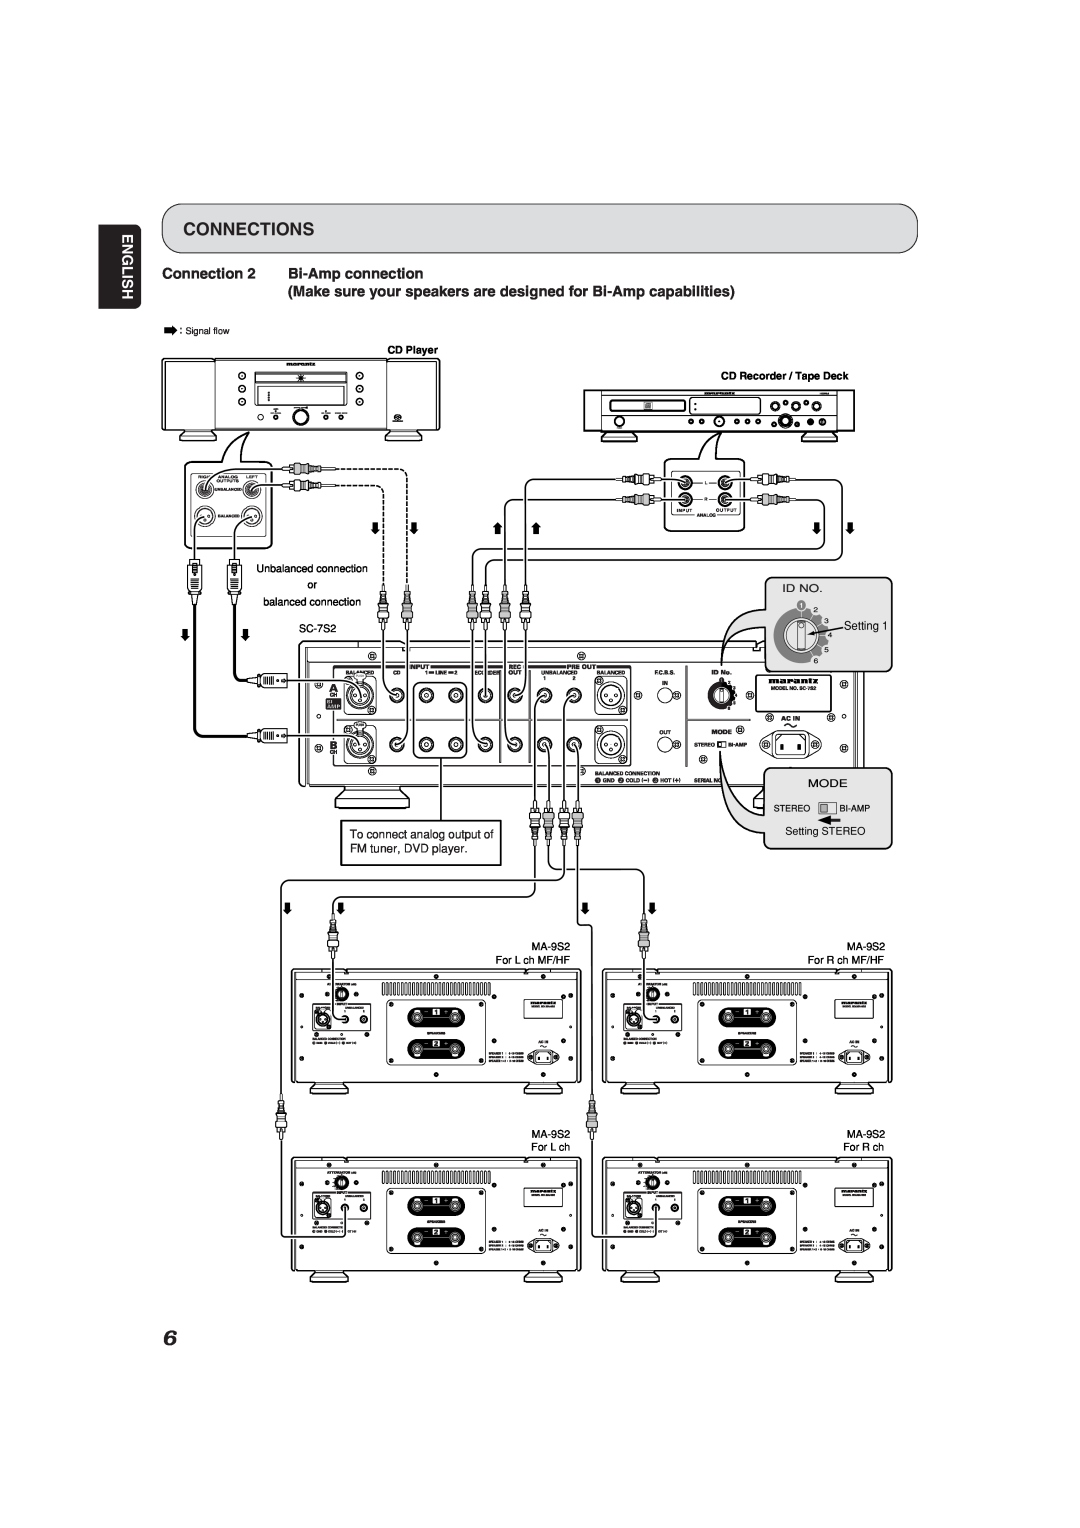 Marantz SC-7S2 Connections, English, Connection 2 Bi-Ampconnection, CD Player CD Recorder / Tape Deck, Mode, ：Signal flow 